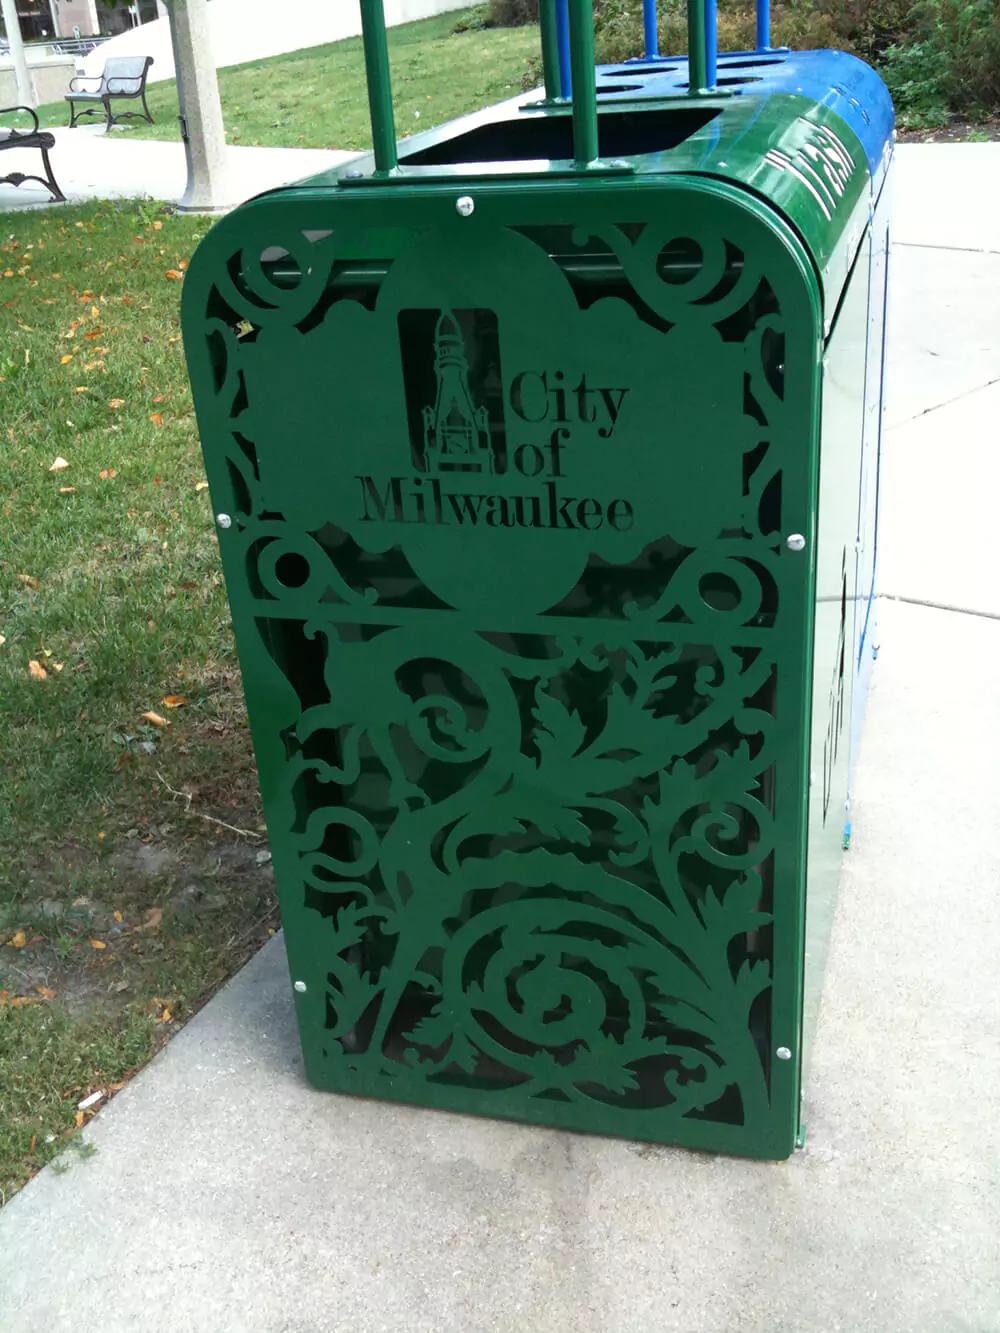 City of Milwaukee Trash